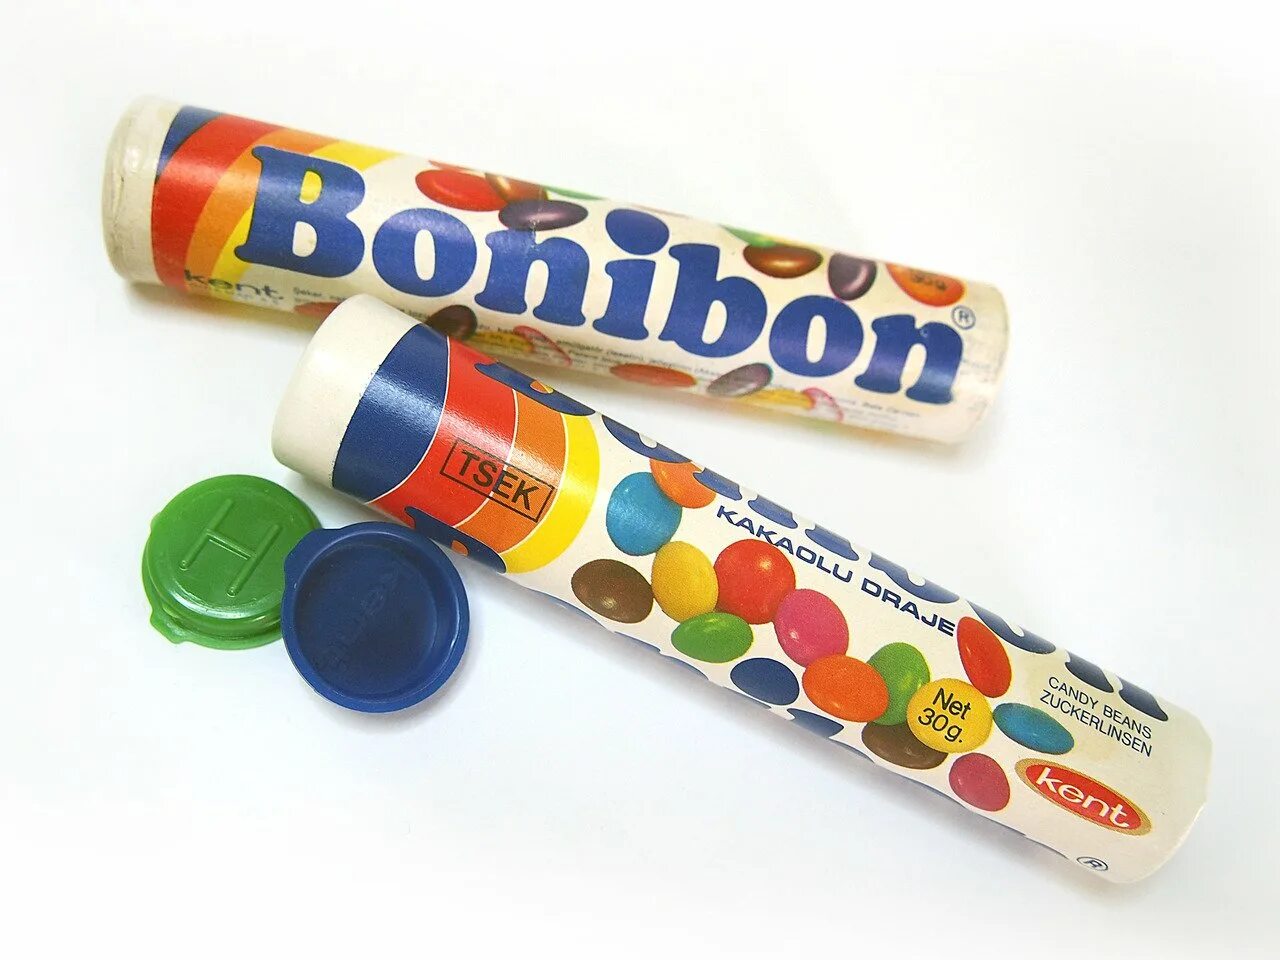 Драже Bonibon 90е. Бондибон конфеты 90е. Конфеты 90х. Конфеты из 90-х. Конфеты тюбик